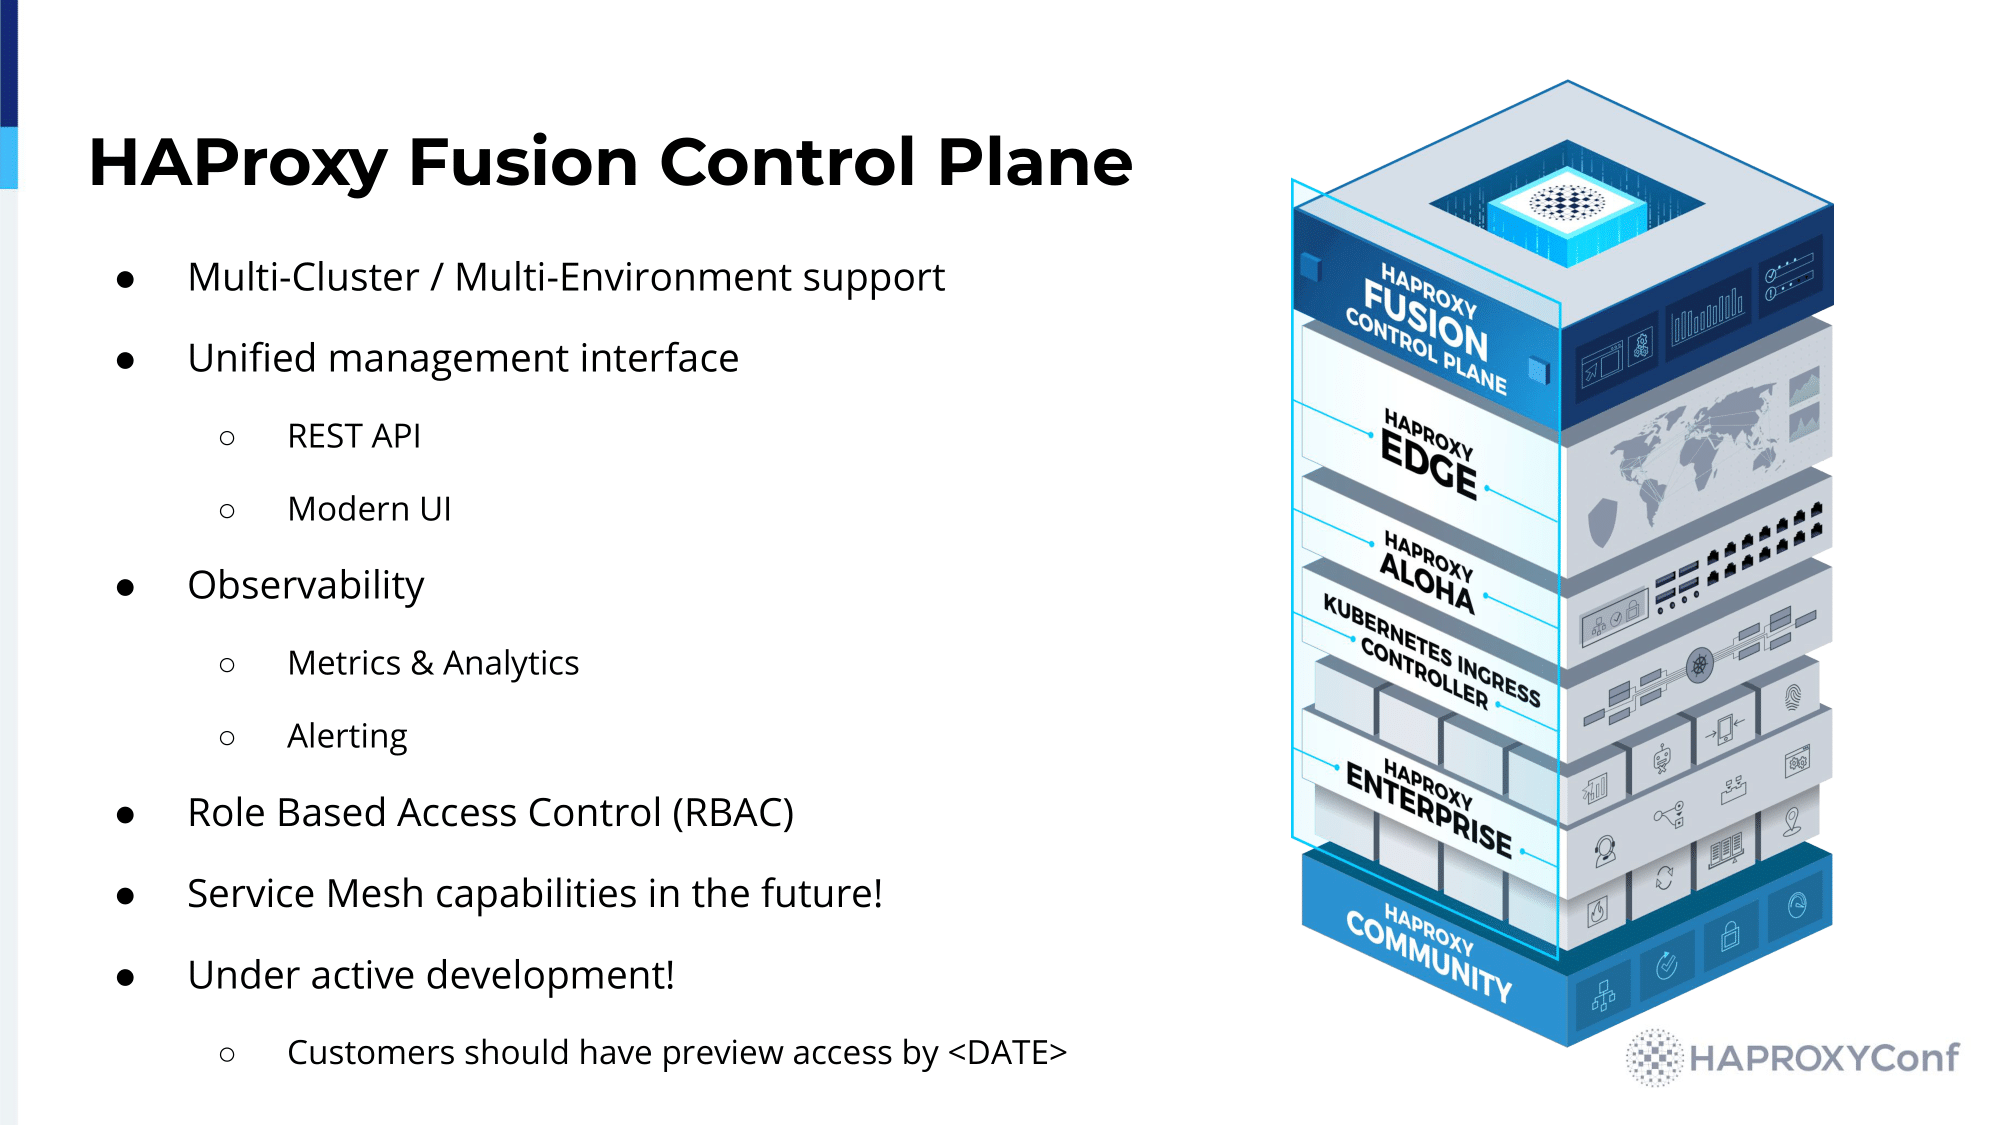 17.-haproxy-fusion-control-plane